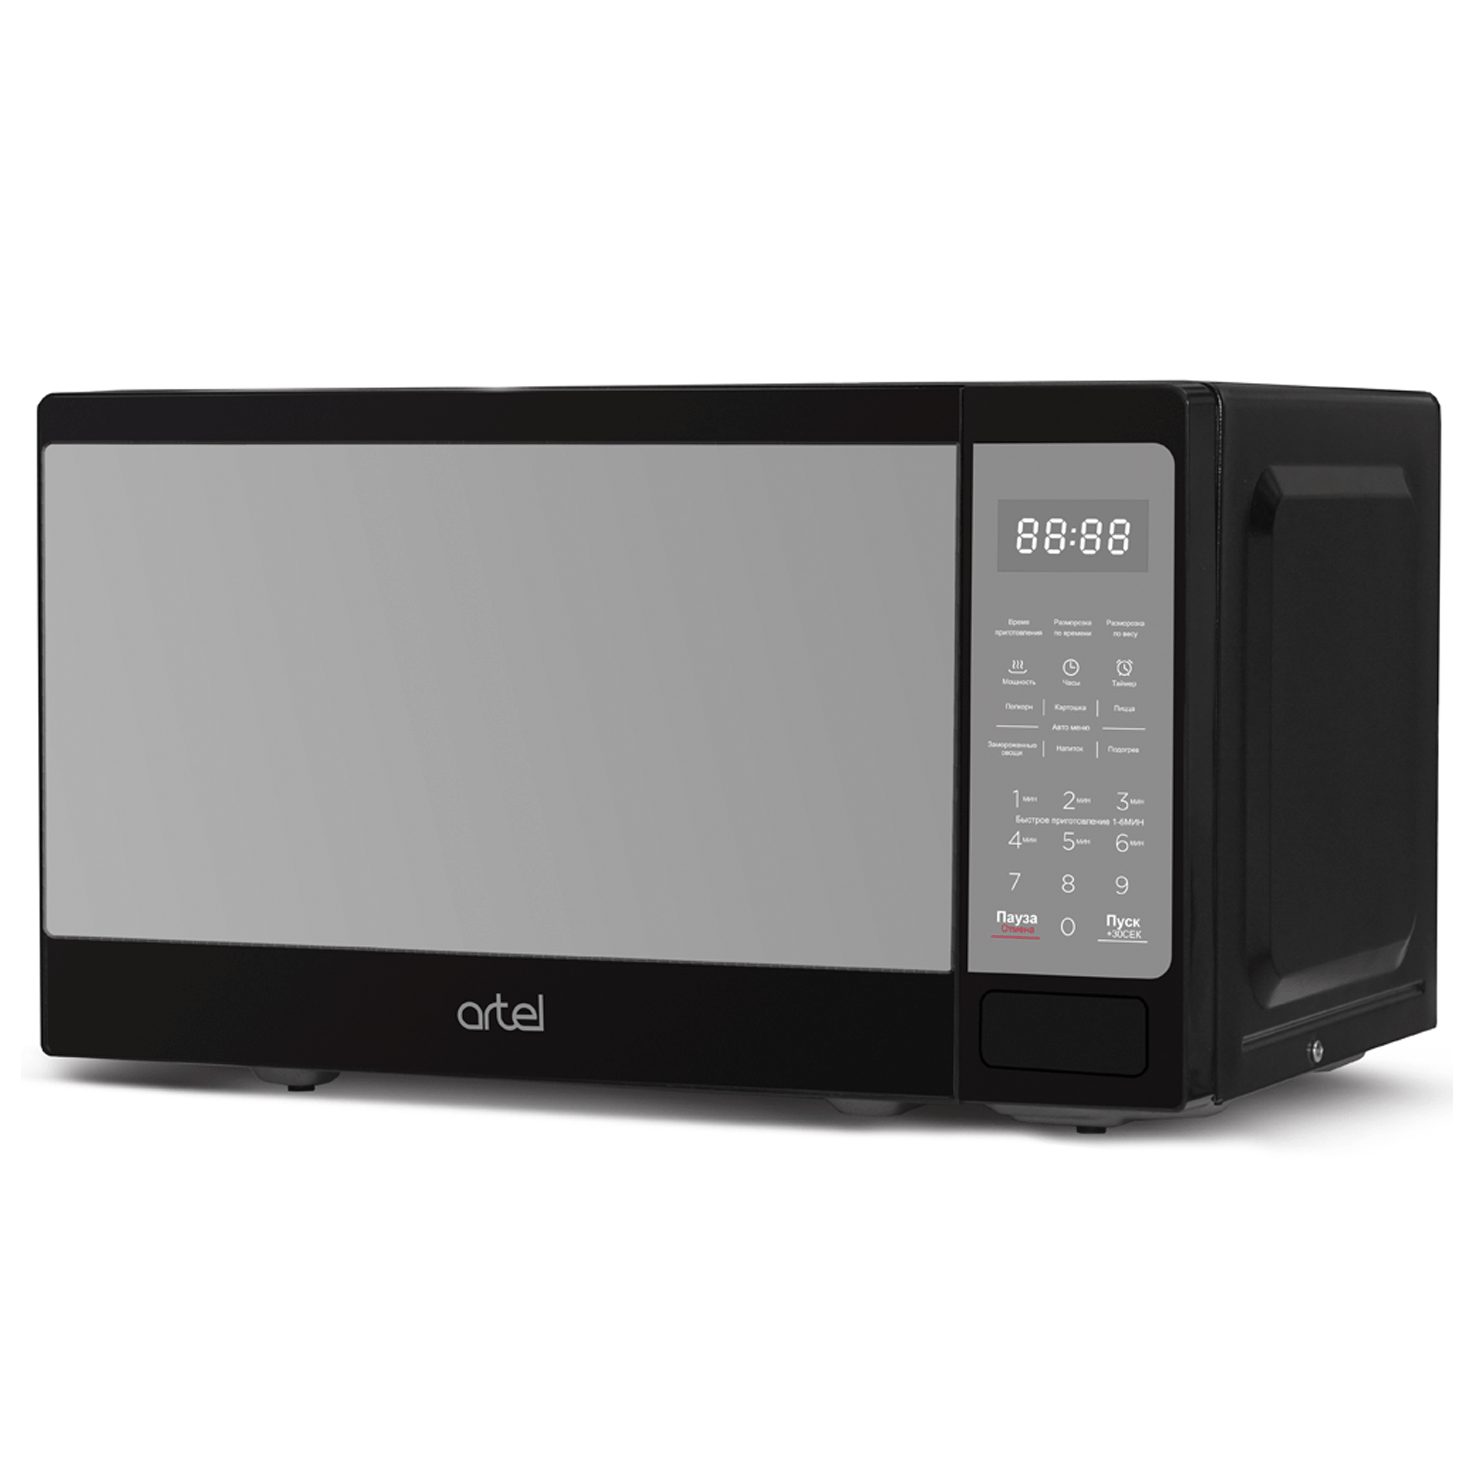 Artel EM720C2GV microwave